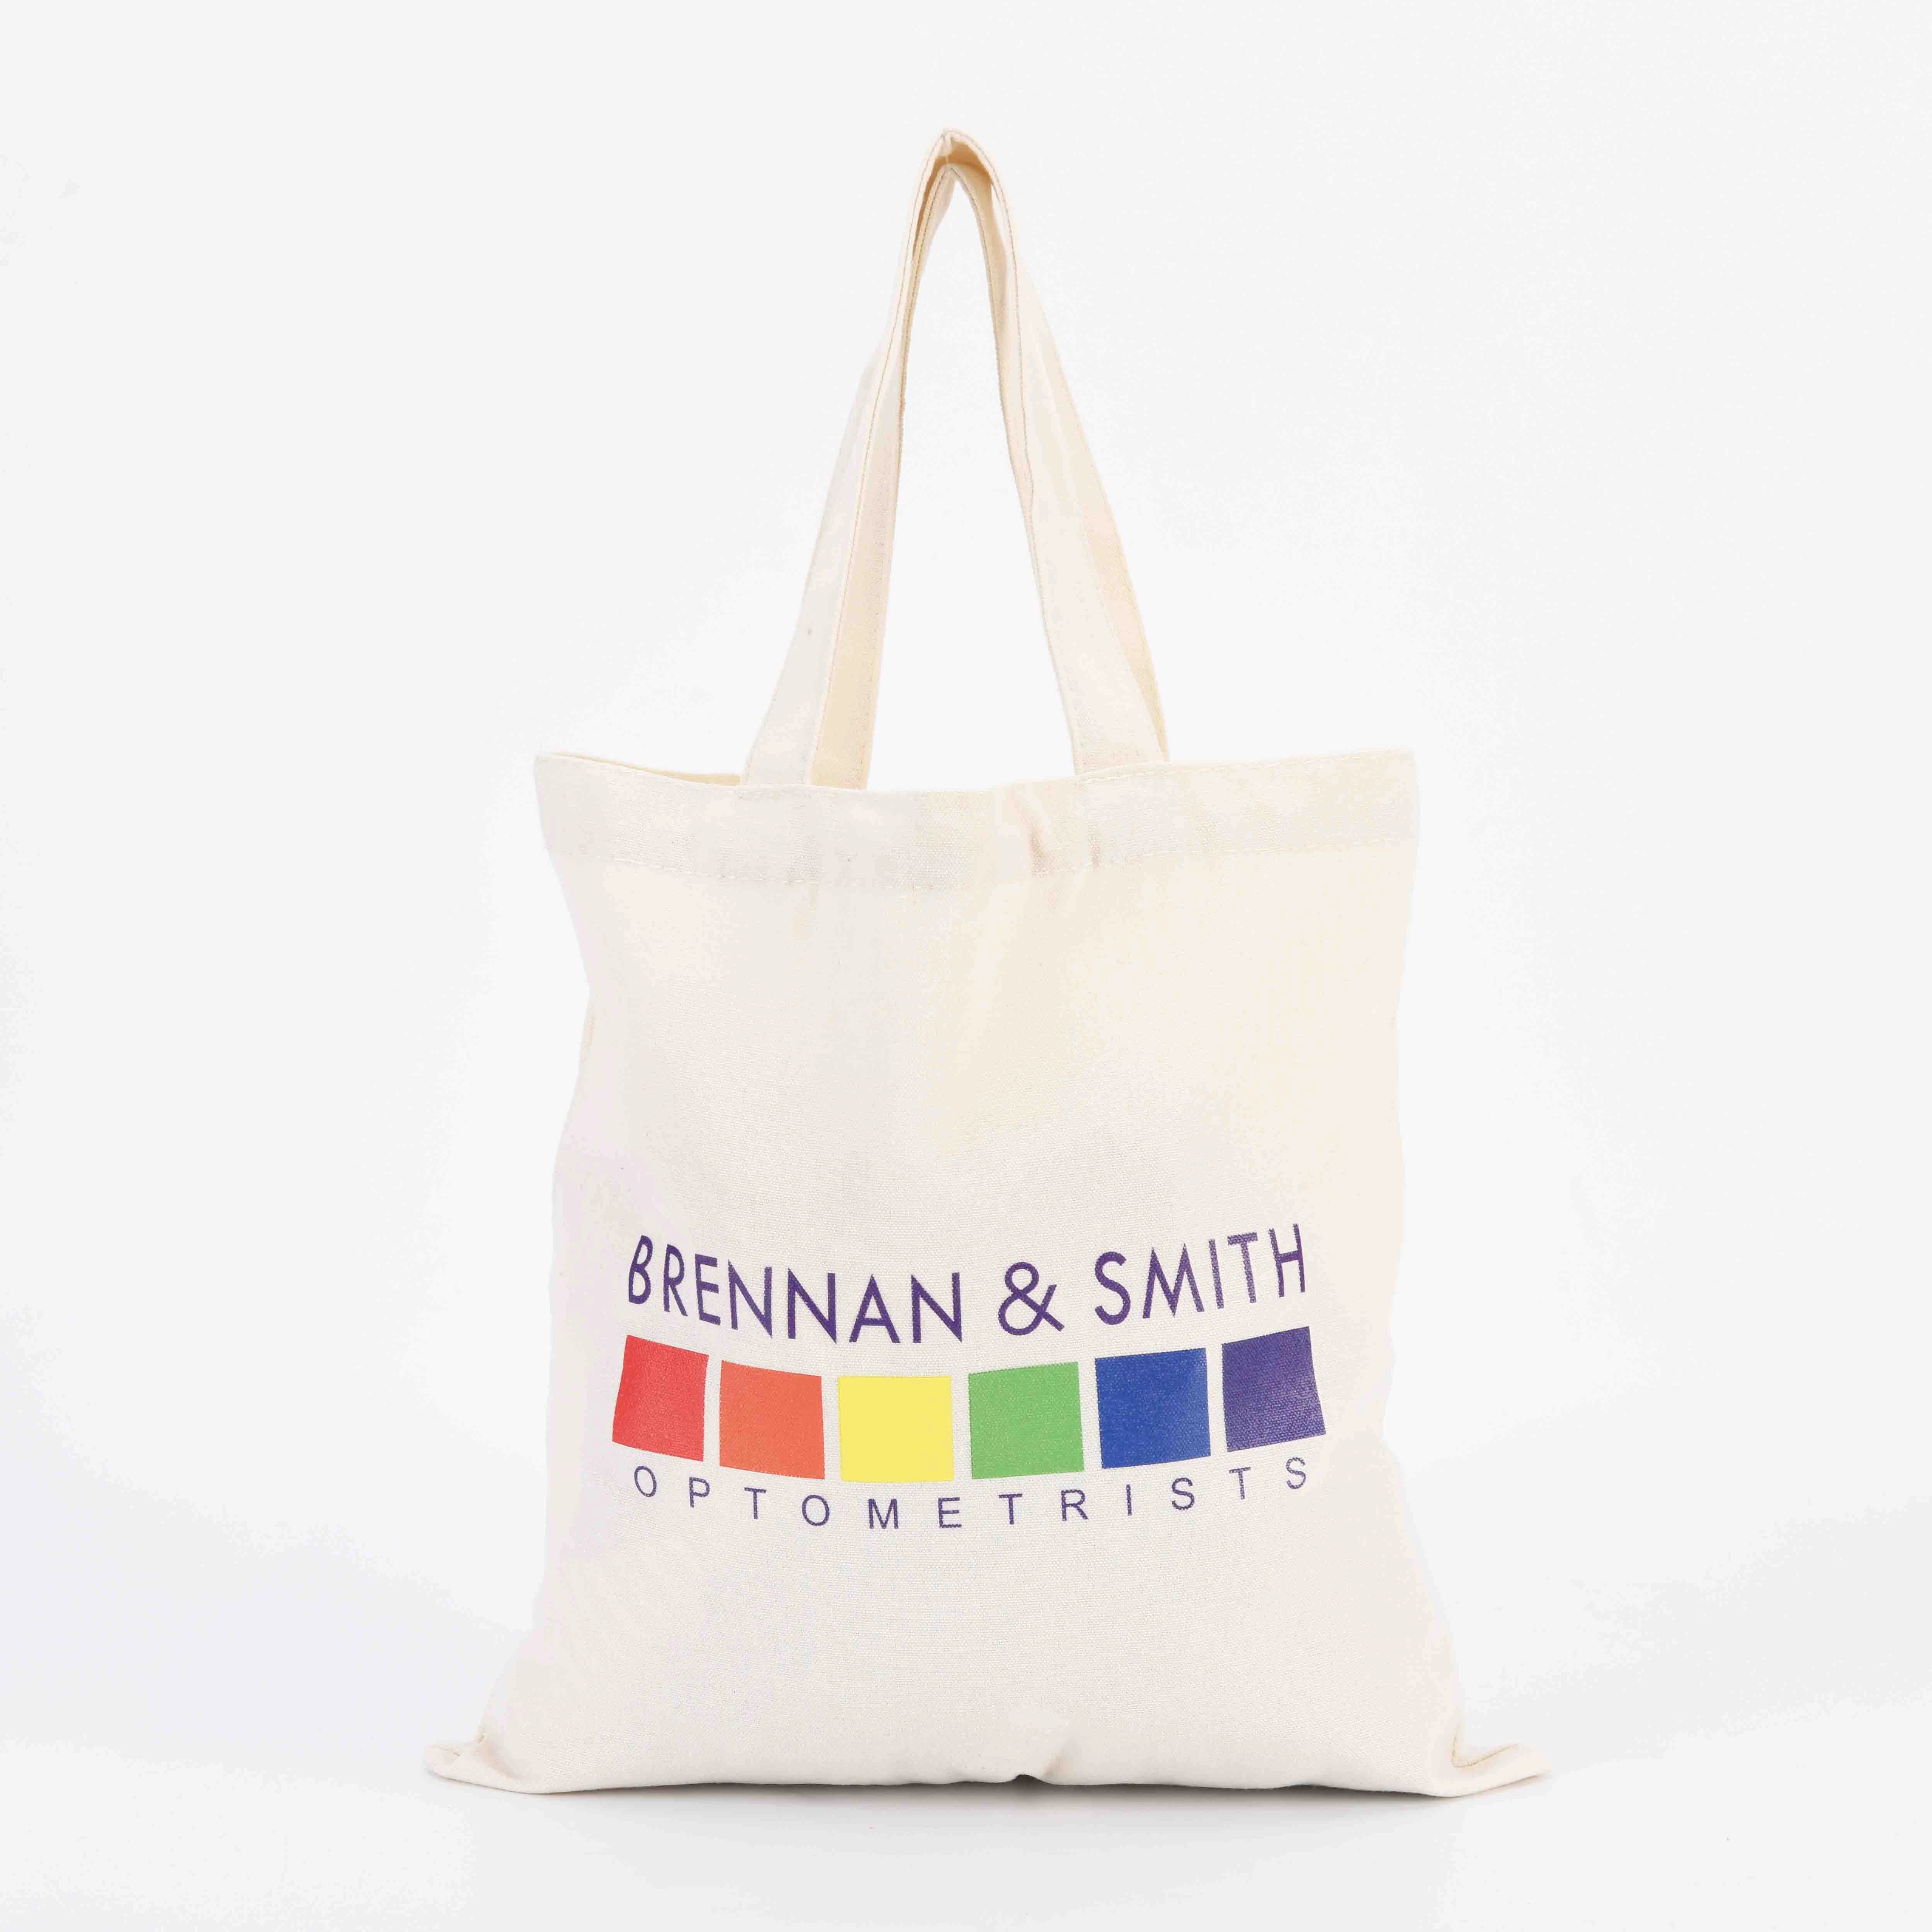 Plain reusable eco-friendly cotton tote shopping bag with custom logo